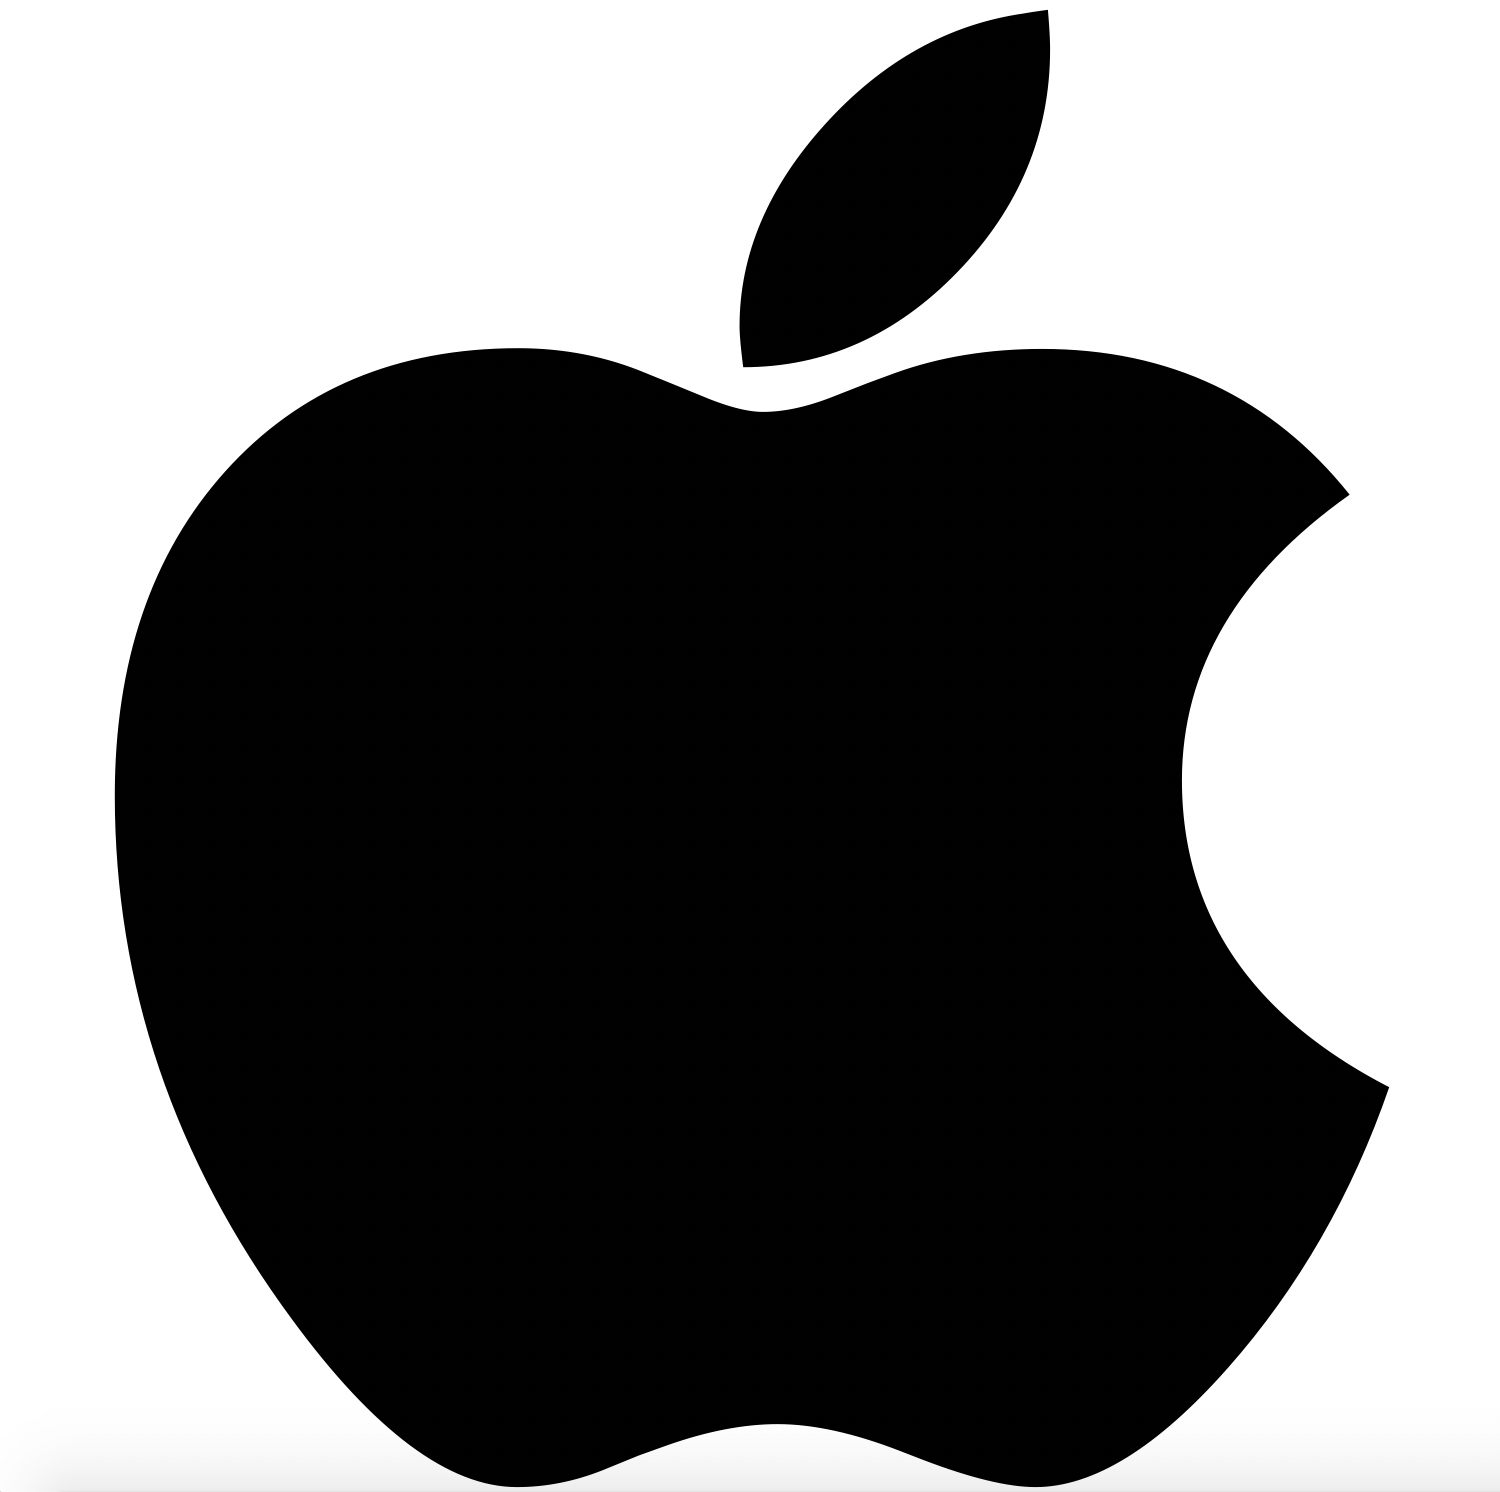 Appleマーク アップルマーク を入力するショートカットキー フカイチブログ お金よりも時間を稼げ が信条の起業家 深作浩一郎